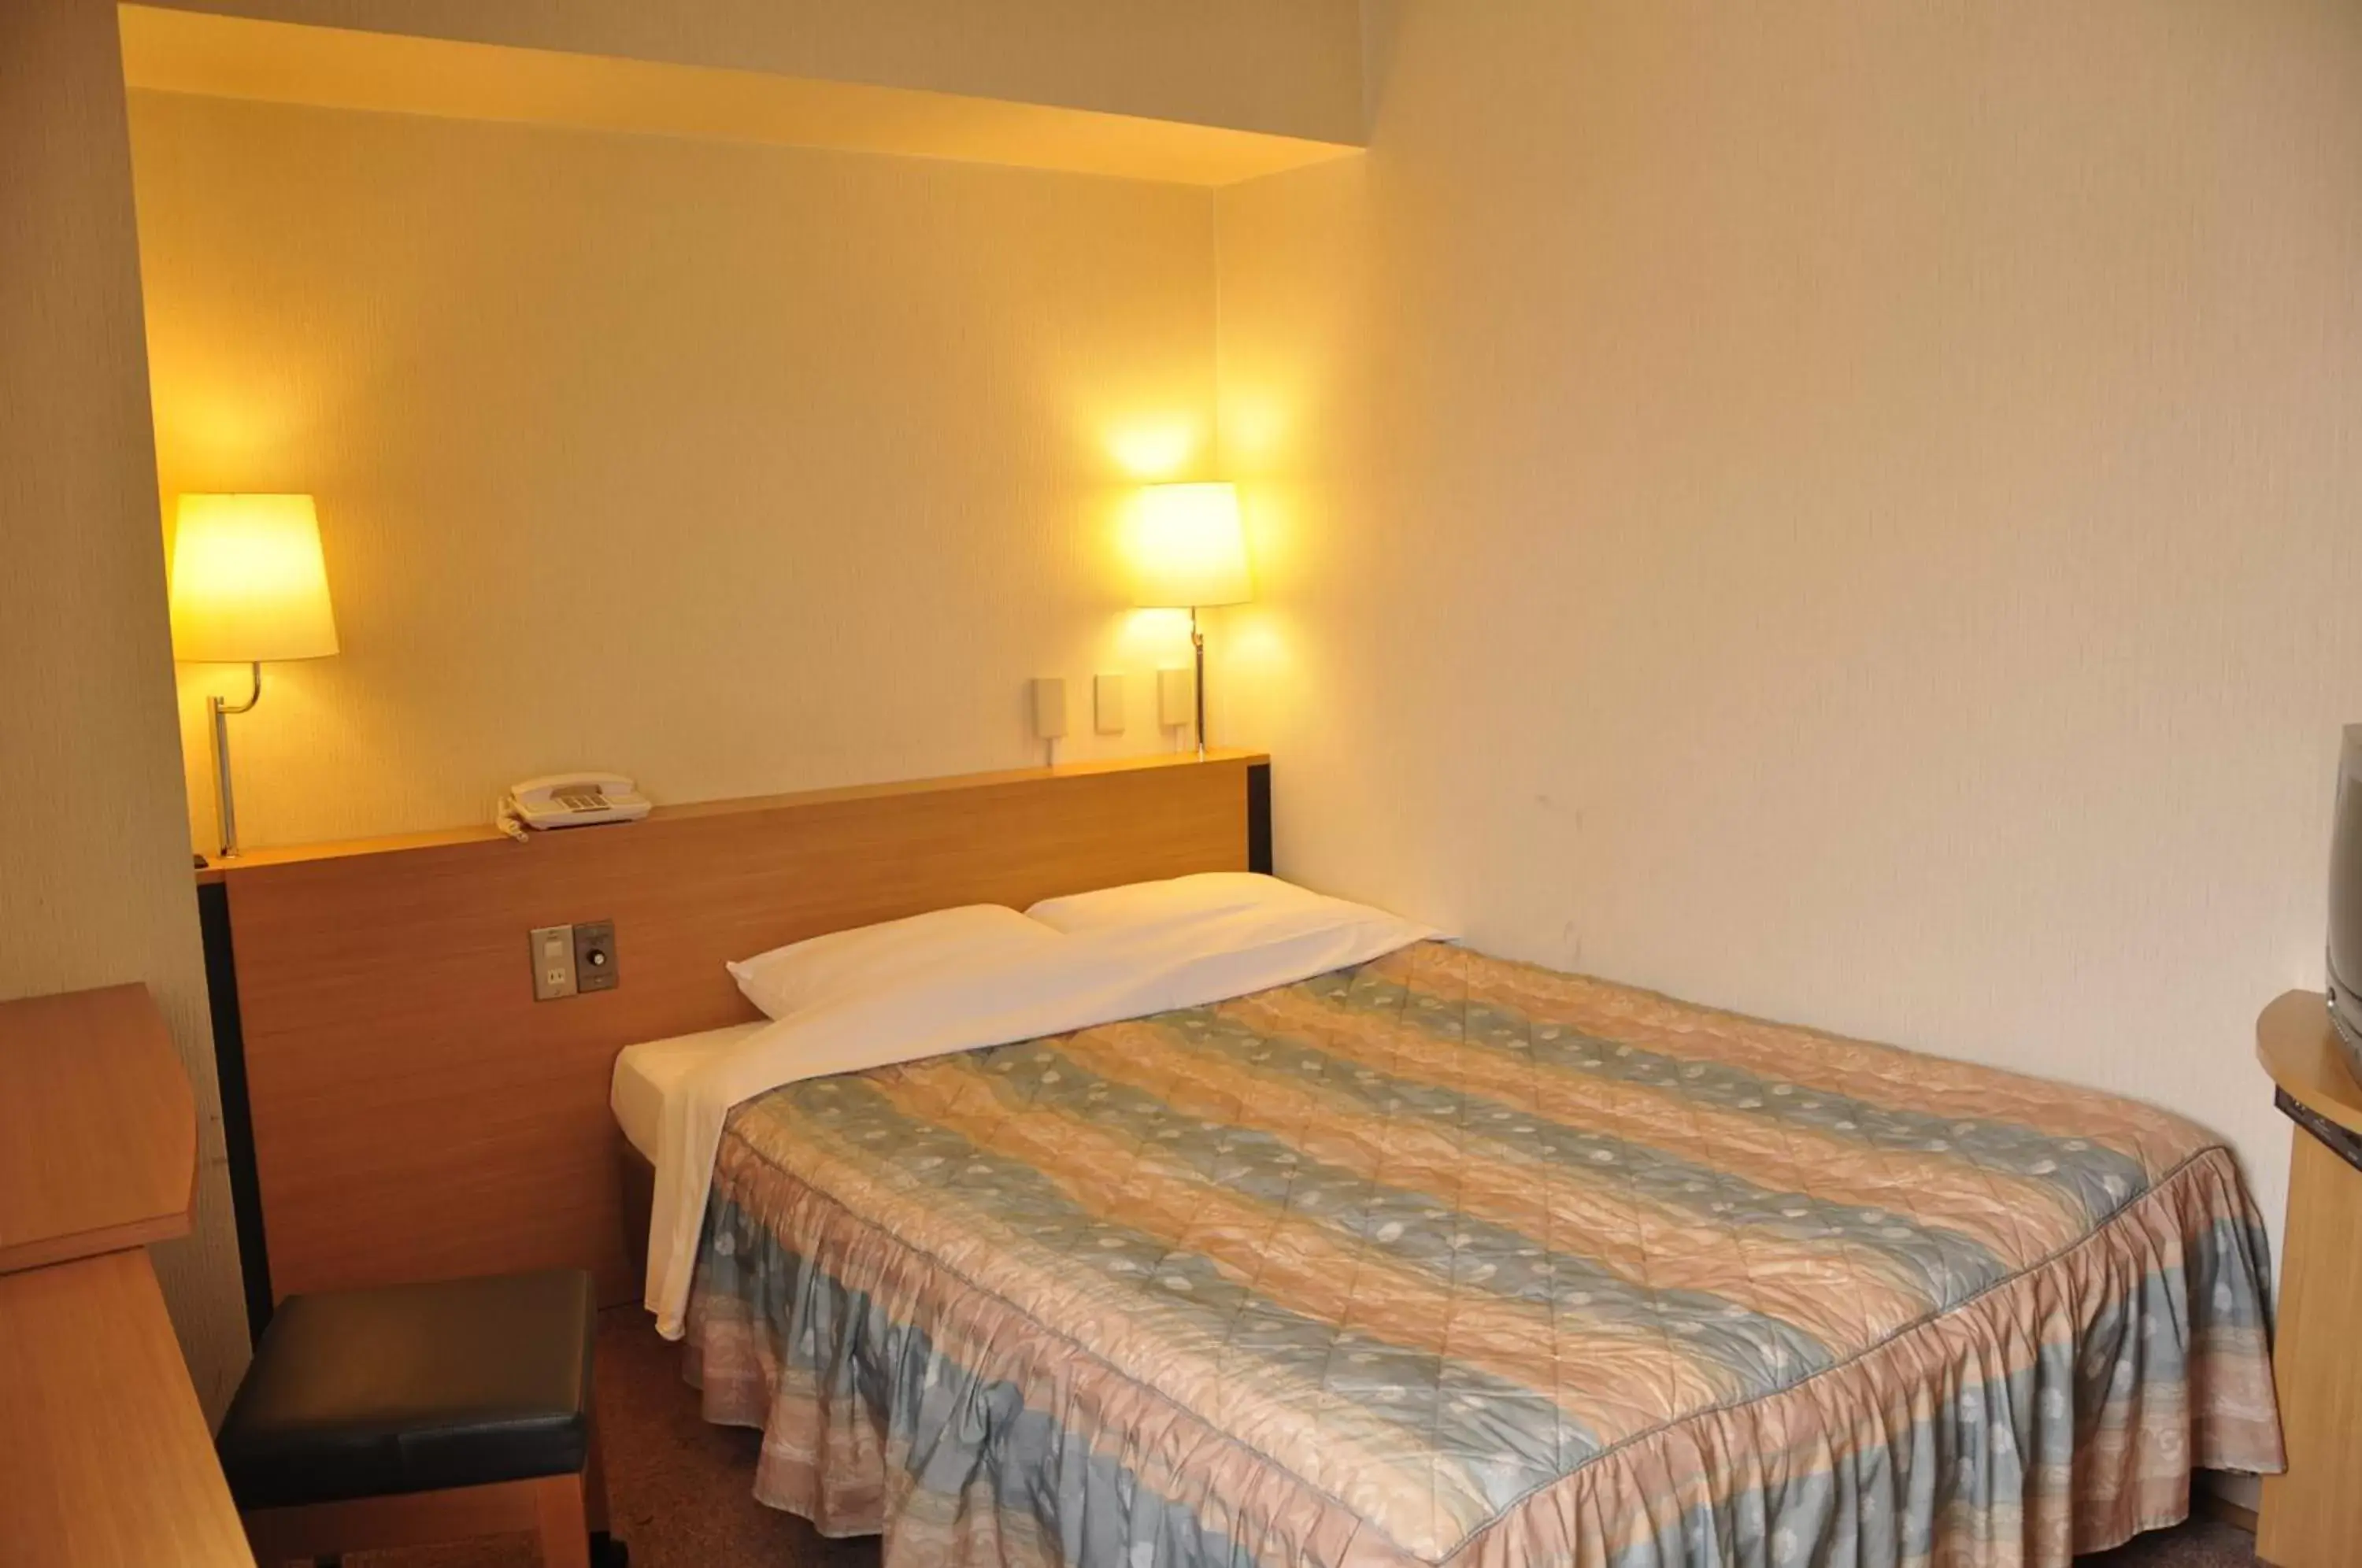 Bed, Room Photo in Hotel Kamoike Plaza